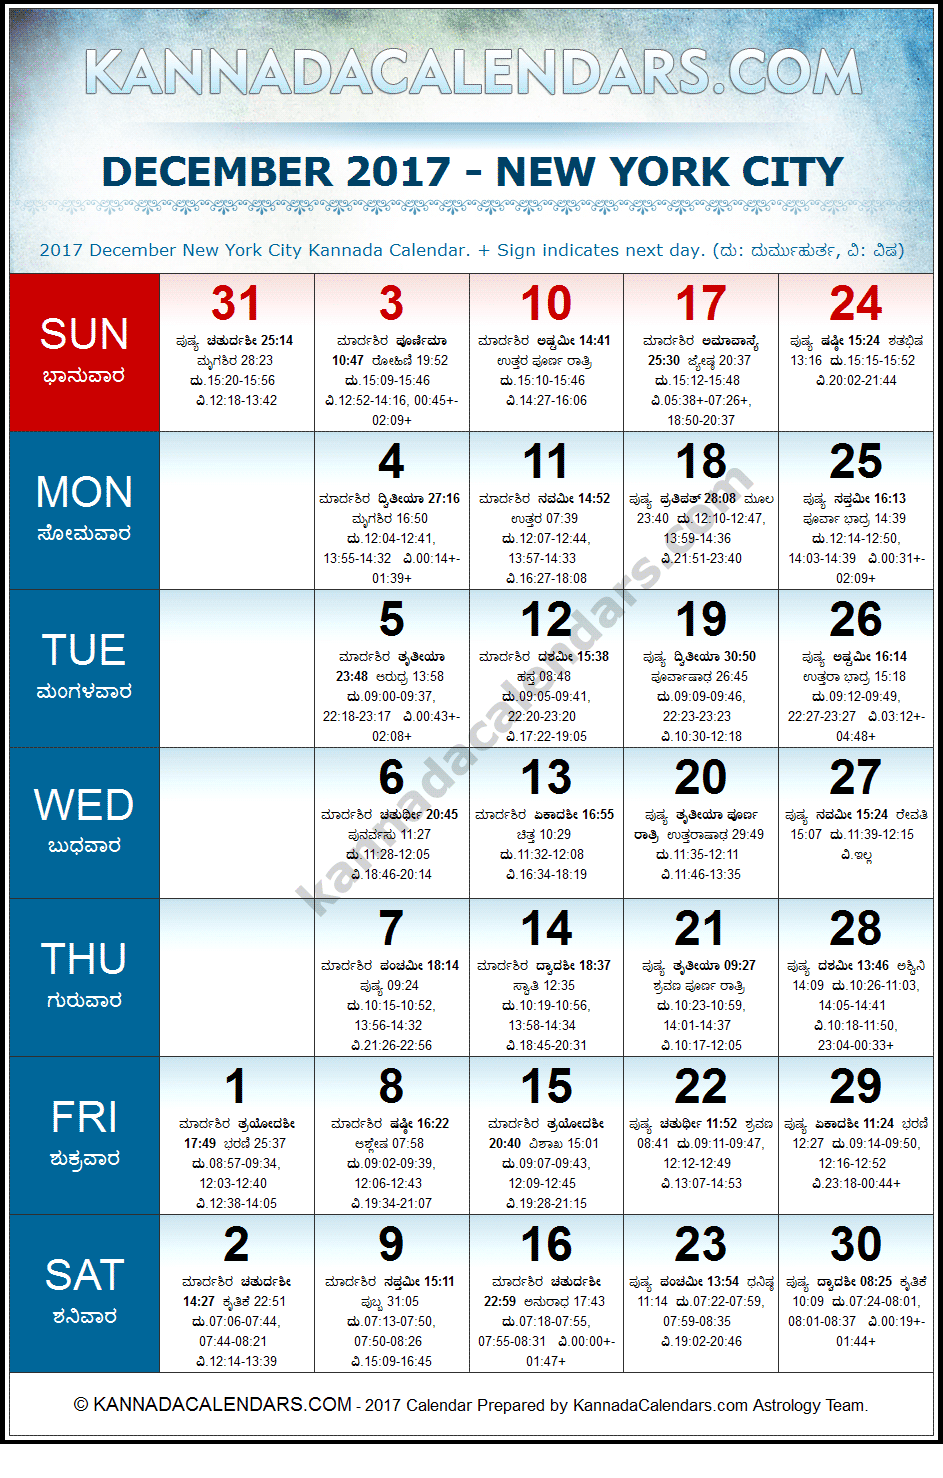 December 2017 Kannada Calendar for New York, USA